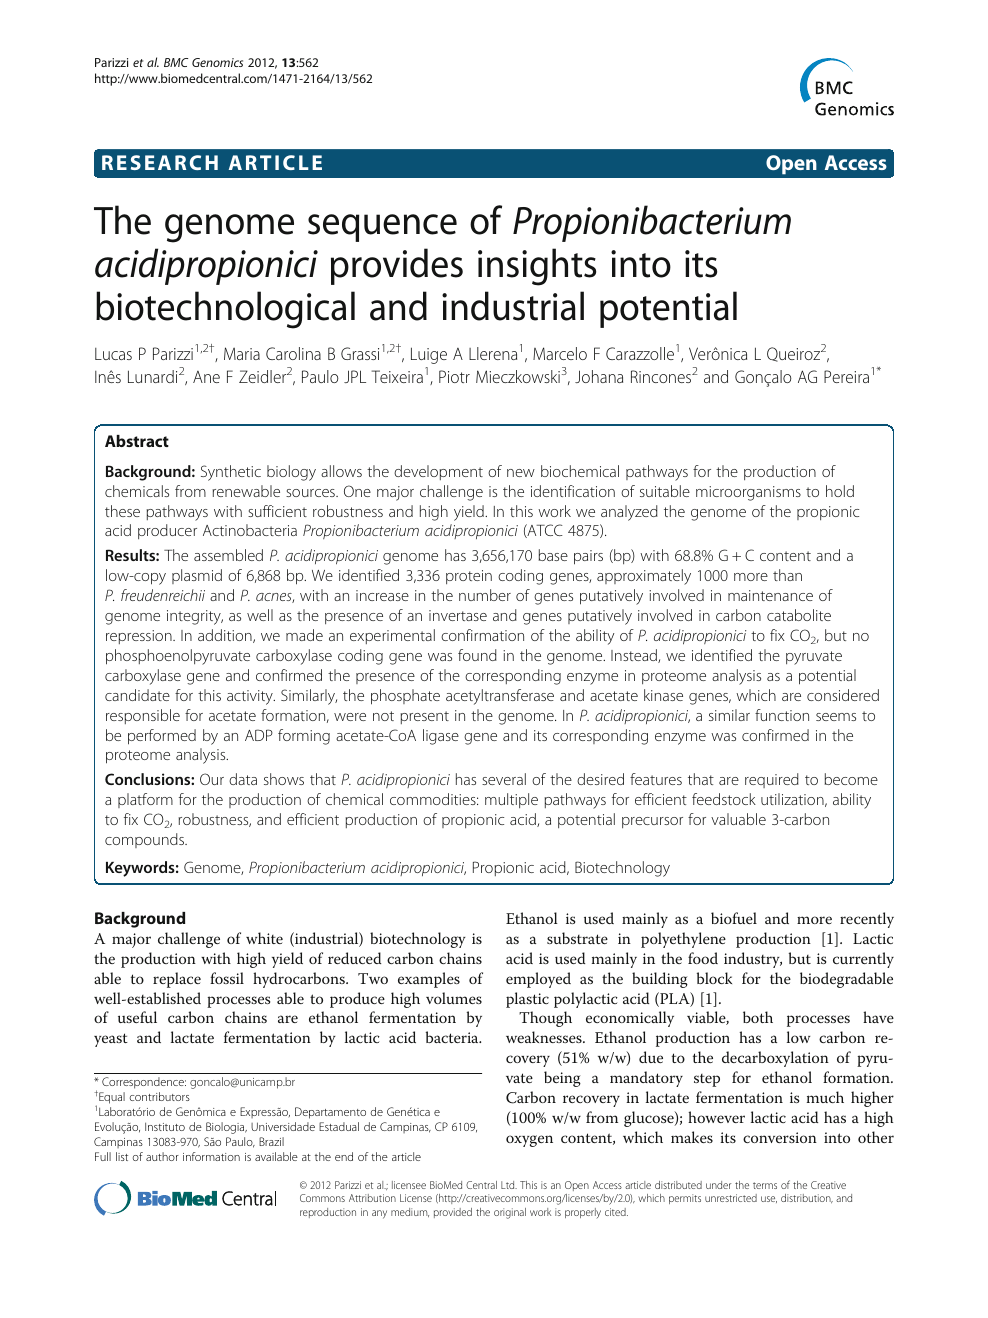 Prêter son Jardin Unique the Genome Sequence Of Propionibacterium Acidipropionici